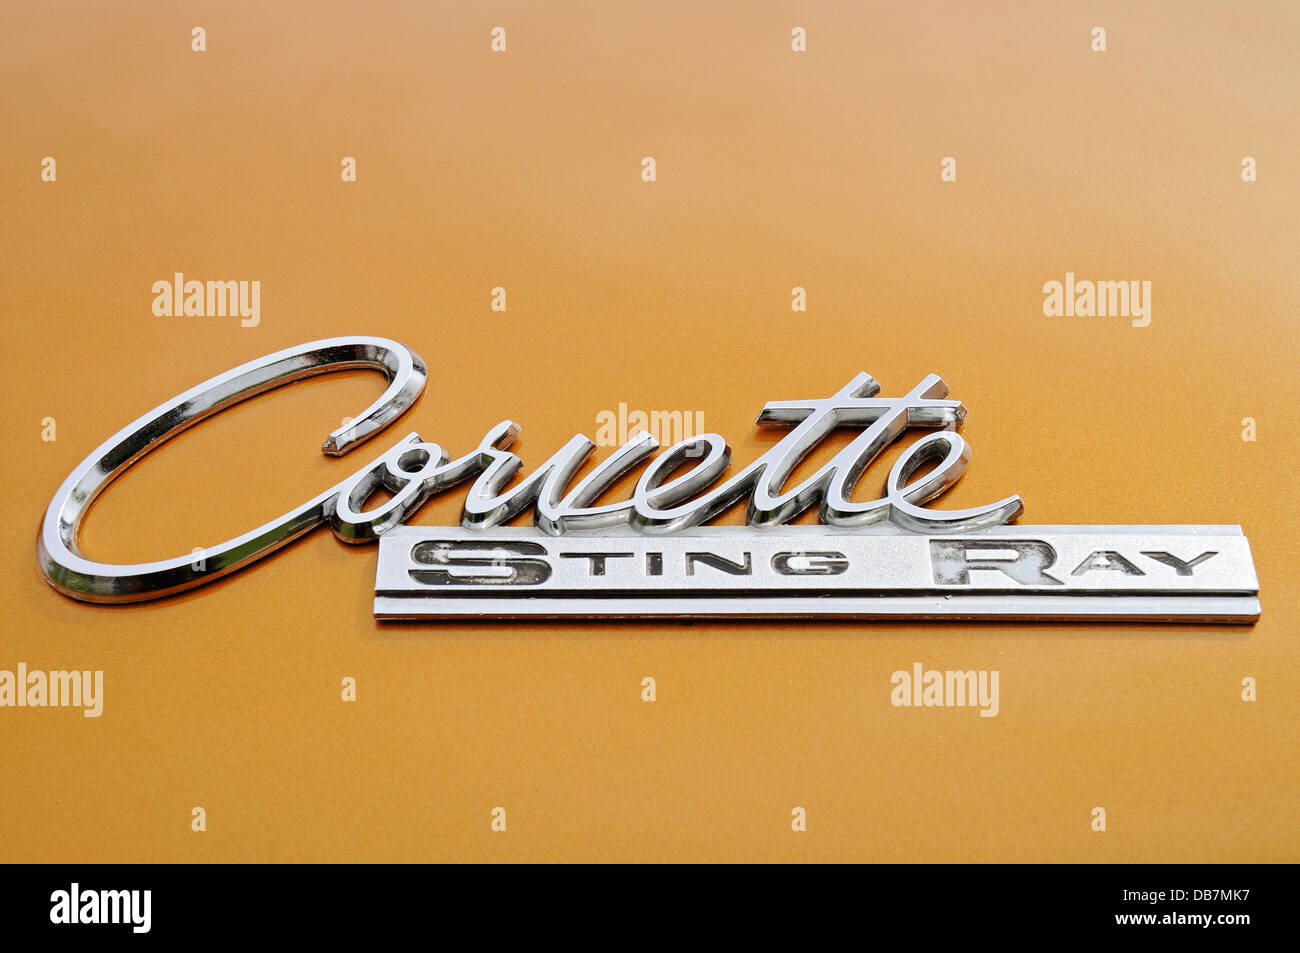 Chevrolet Corvette Sting Ray, logo, lettering, American vintage sports car Stock Photo